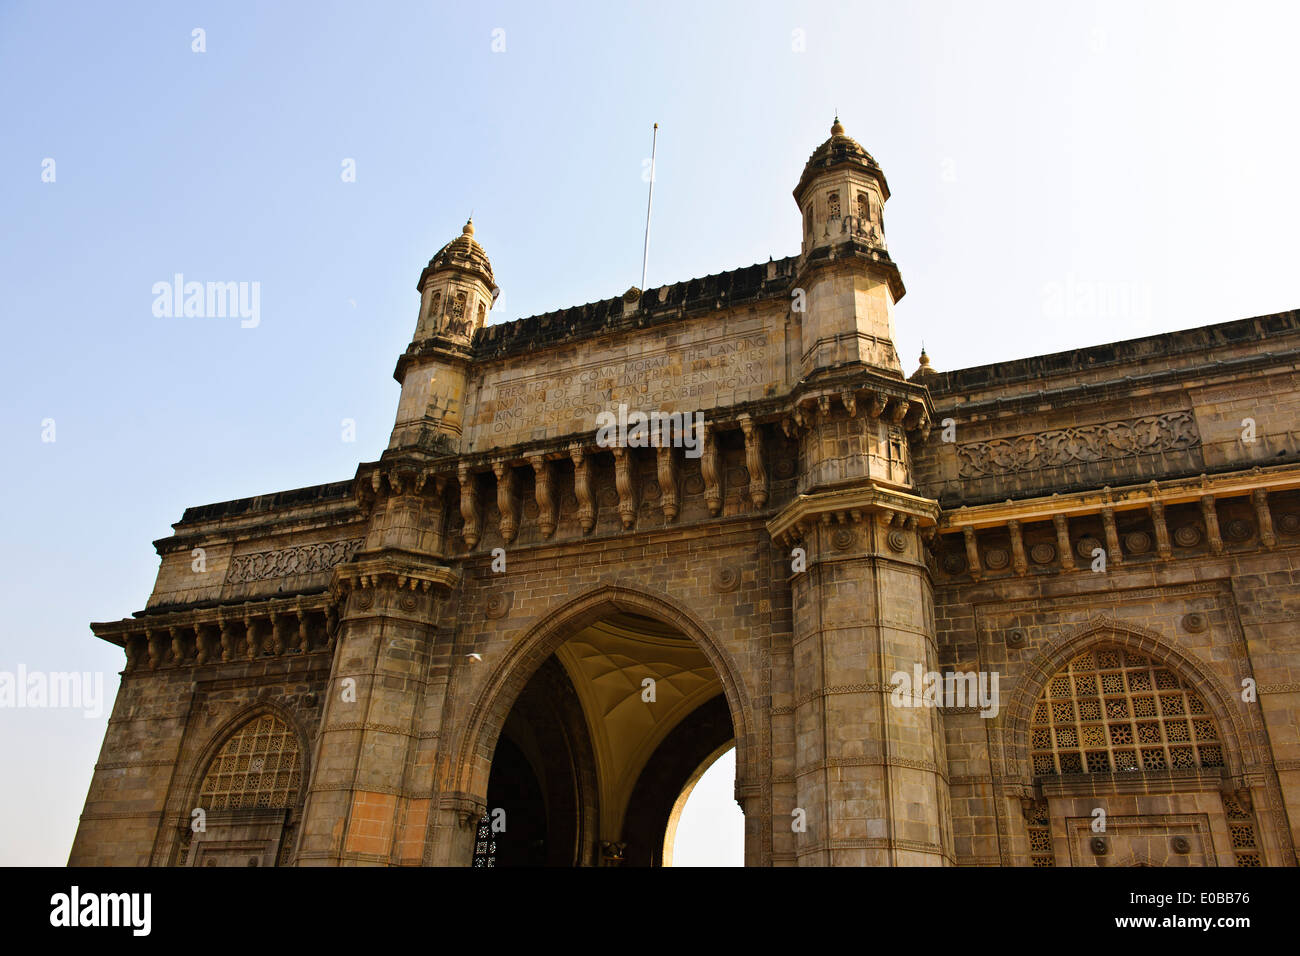 Gate of India,Appollo Bunder,Square,Tourists,School Children in Colorful Saris,promenade,Ferry terminal,Bombay,Mumbai,India Stock Photo